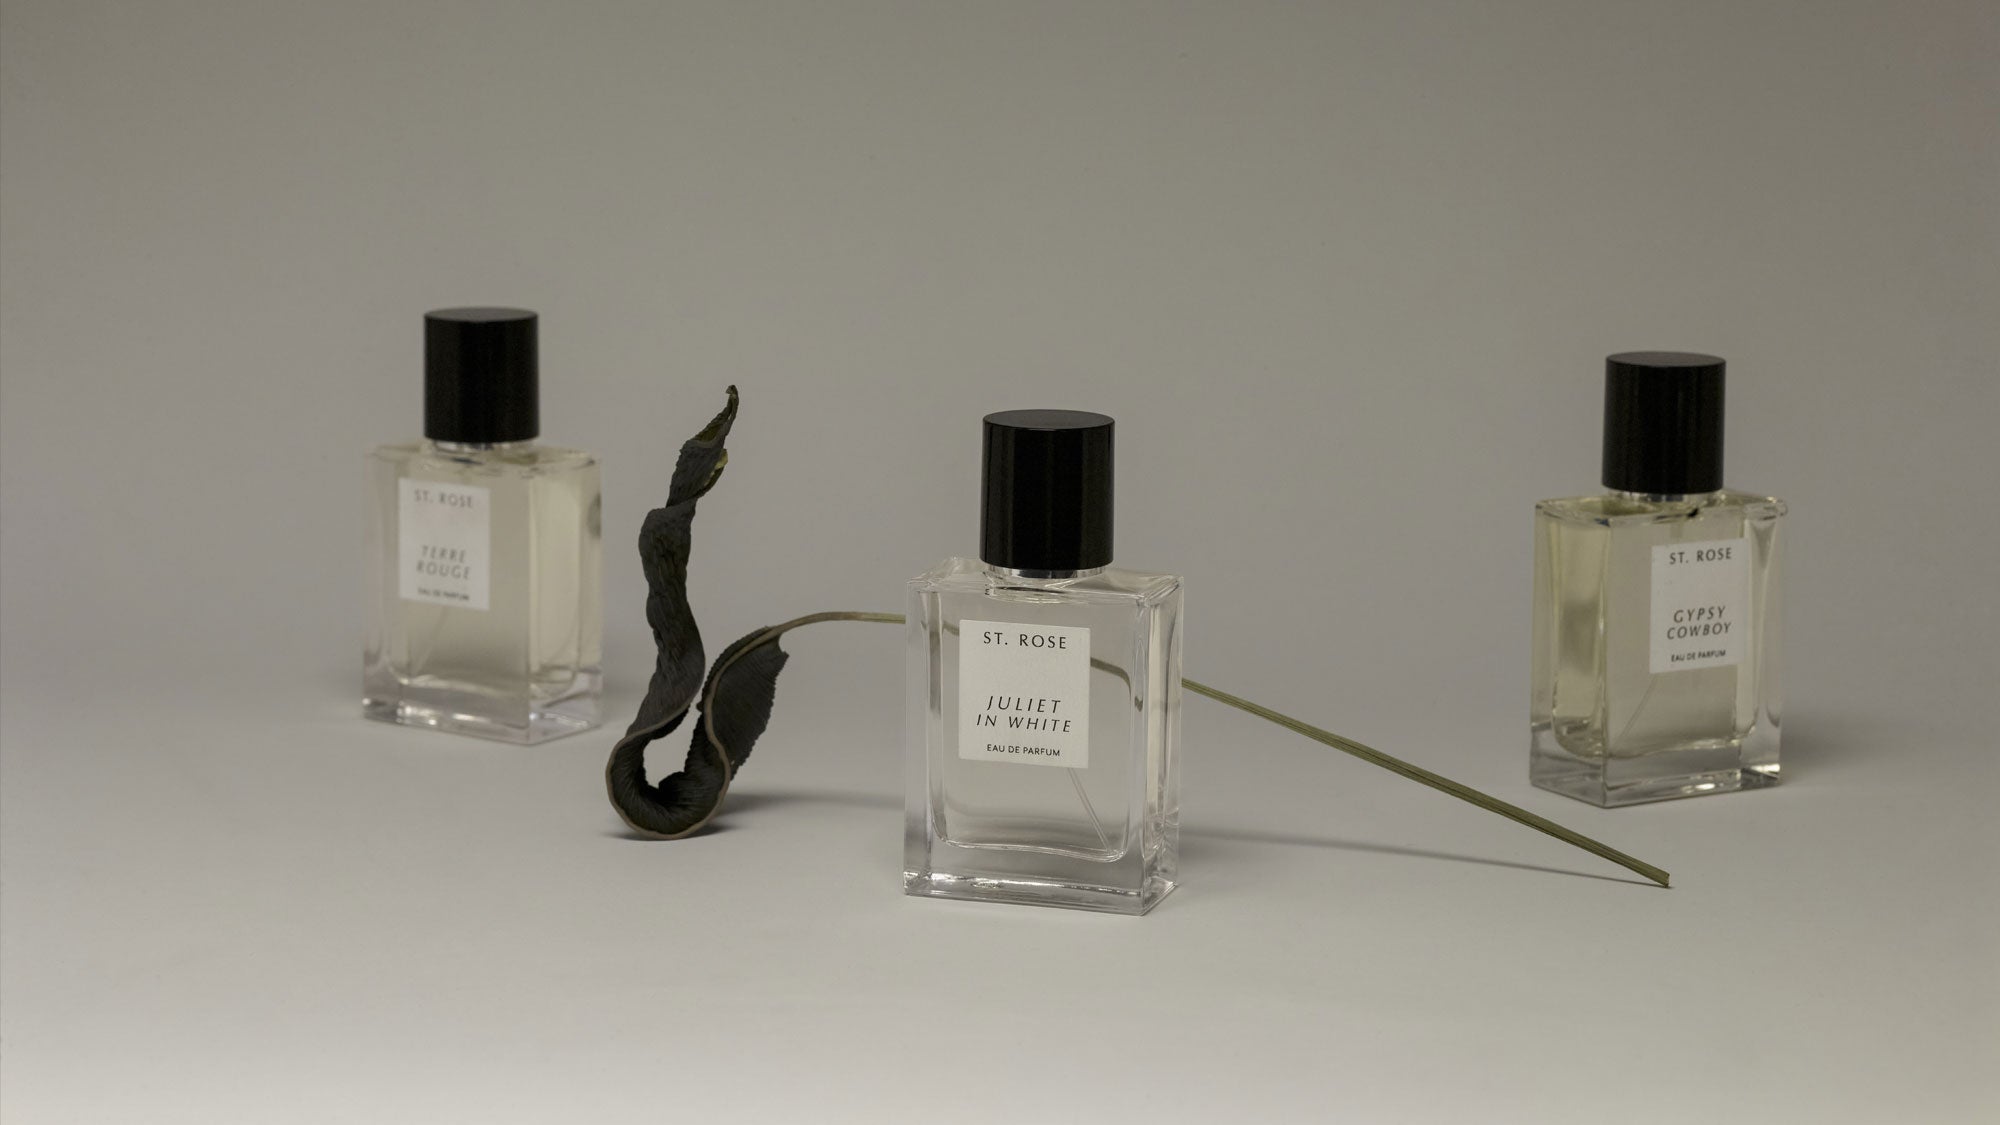 Our Perfumer's Palette